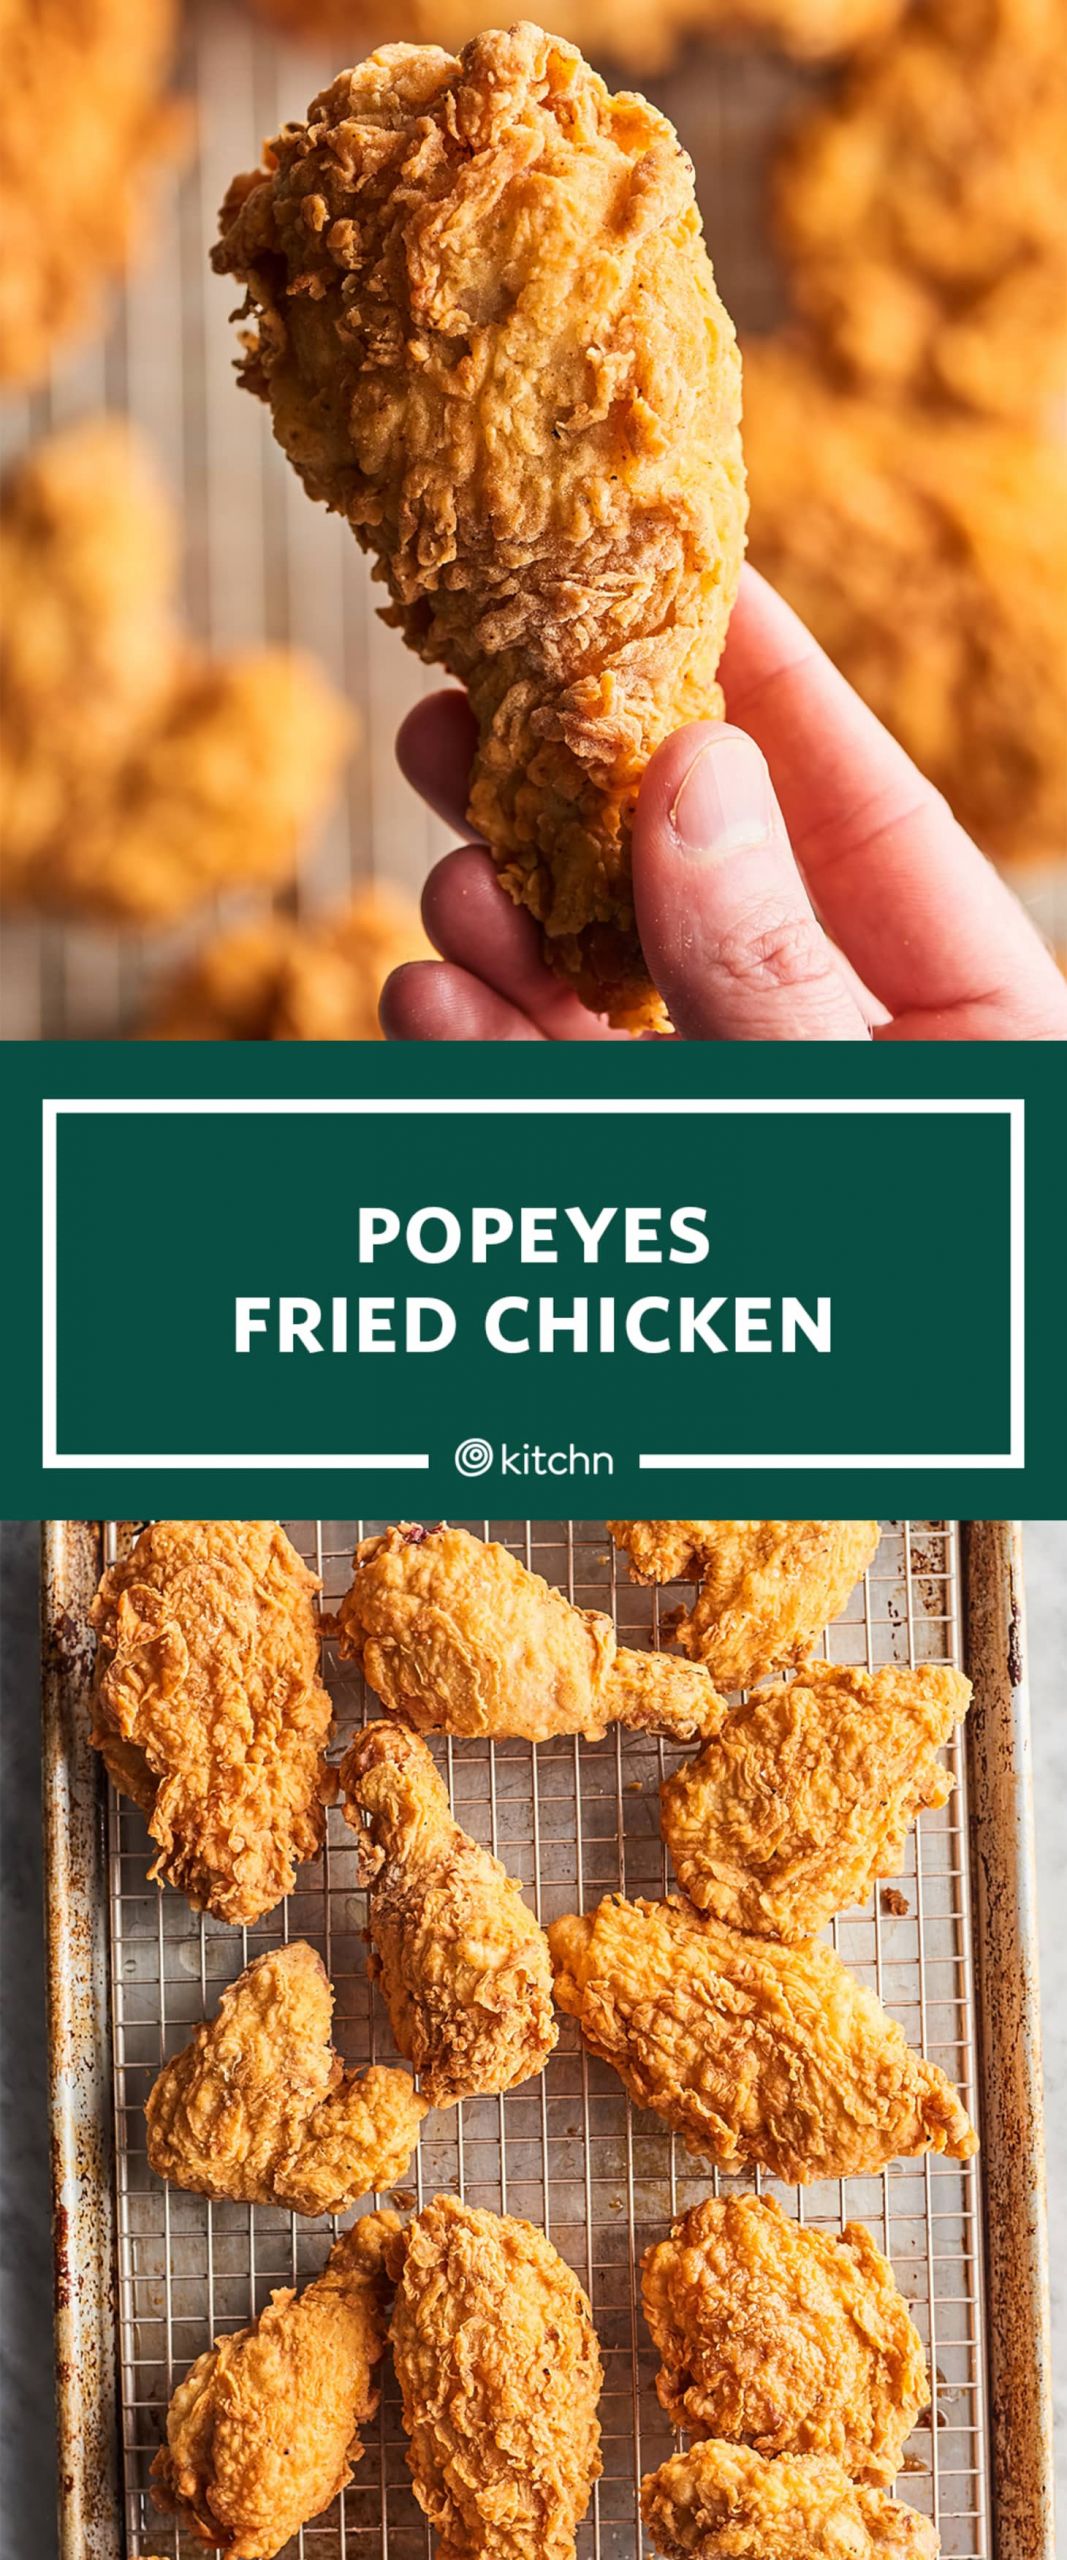 Popeyes Fried Chicken Recipe
 I Tried Popeyes Fried Chicken Recipe